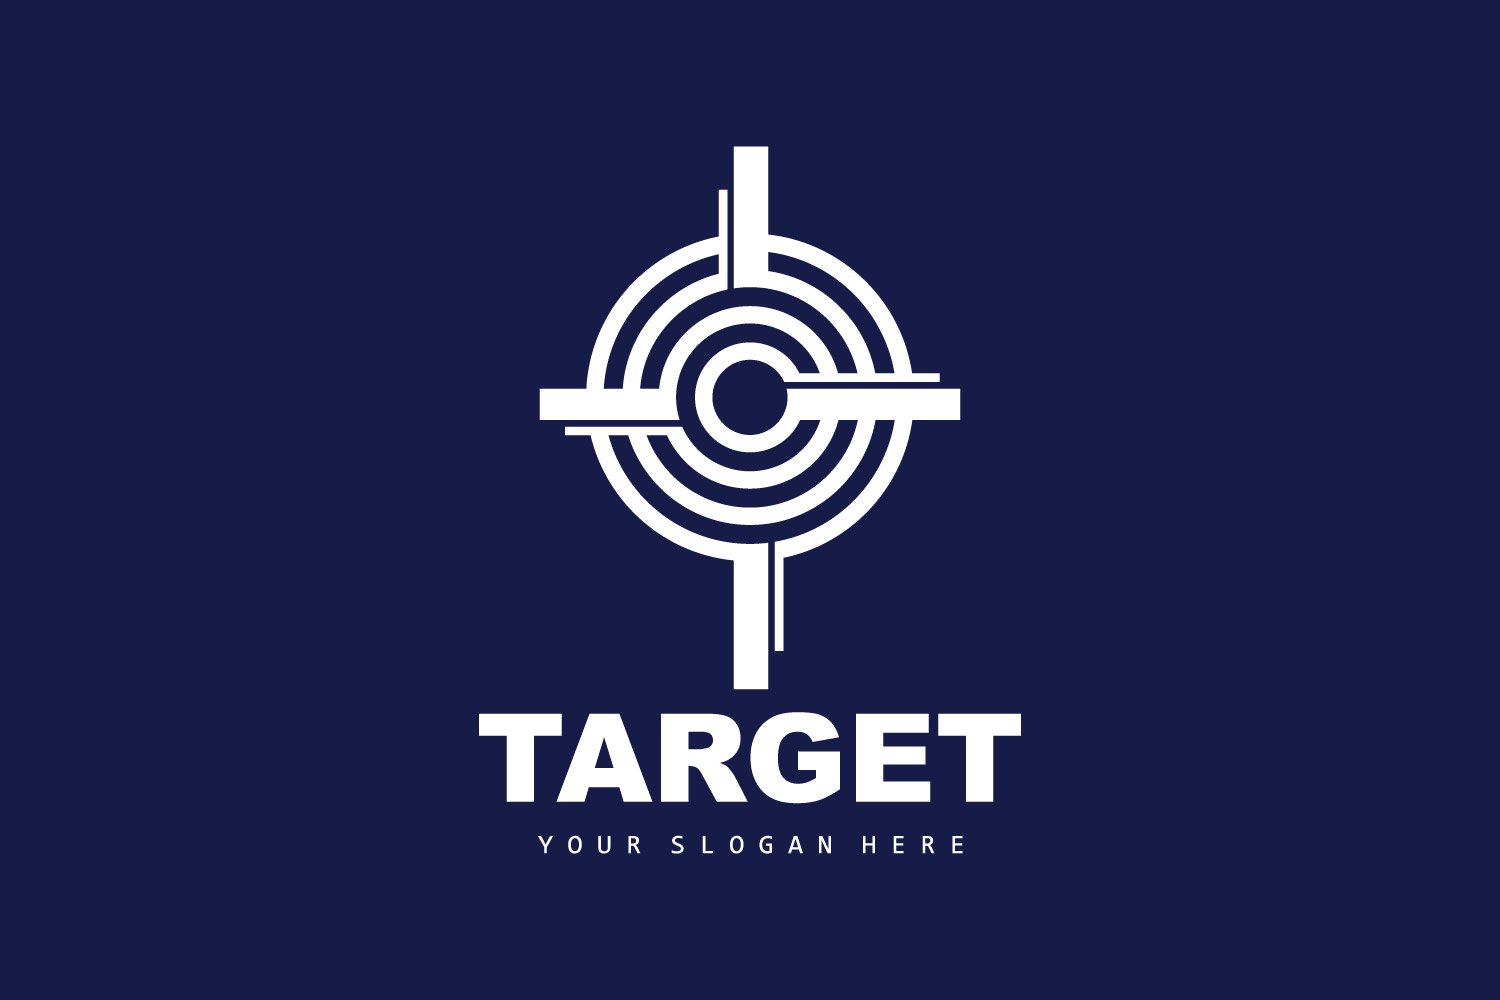 Template #405719 Vector Target Webdesign Template - Logo template Preview